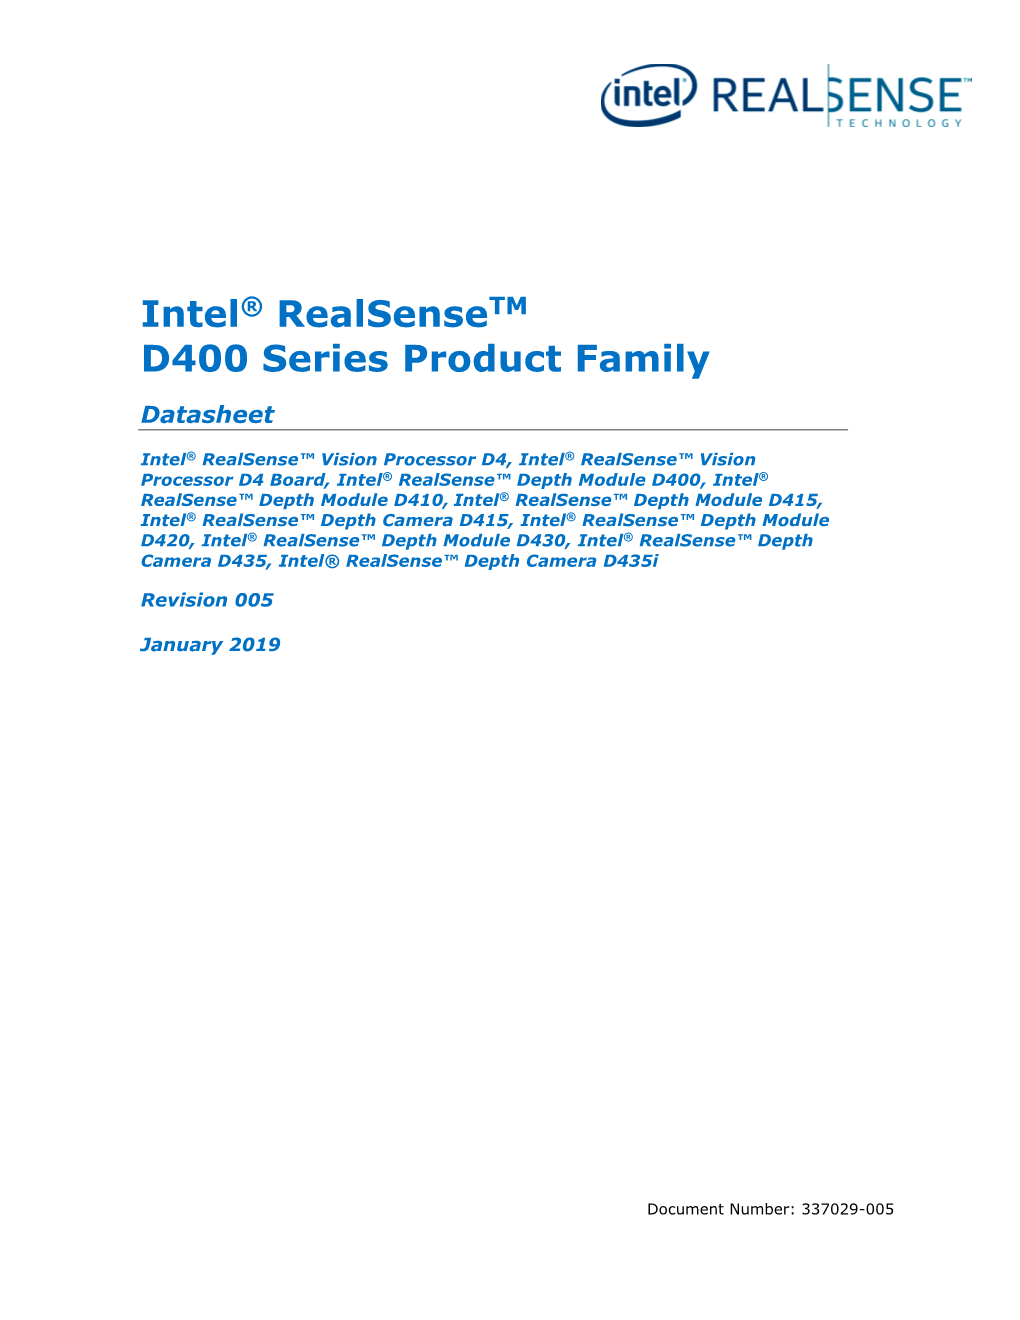 Intel® Realsensetm D400 Series Product Family